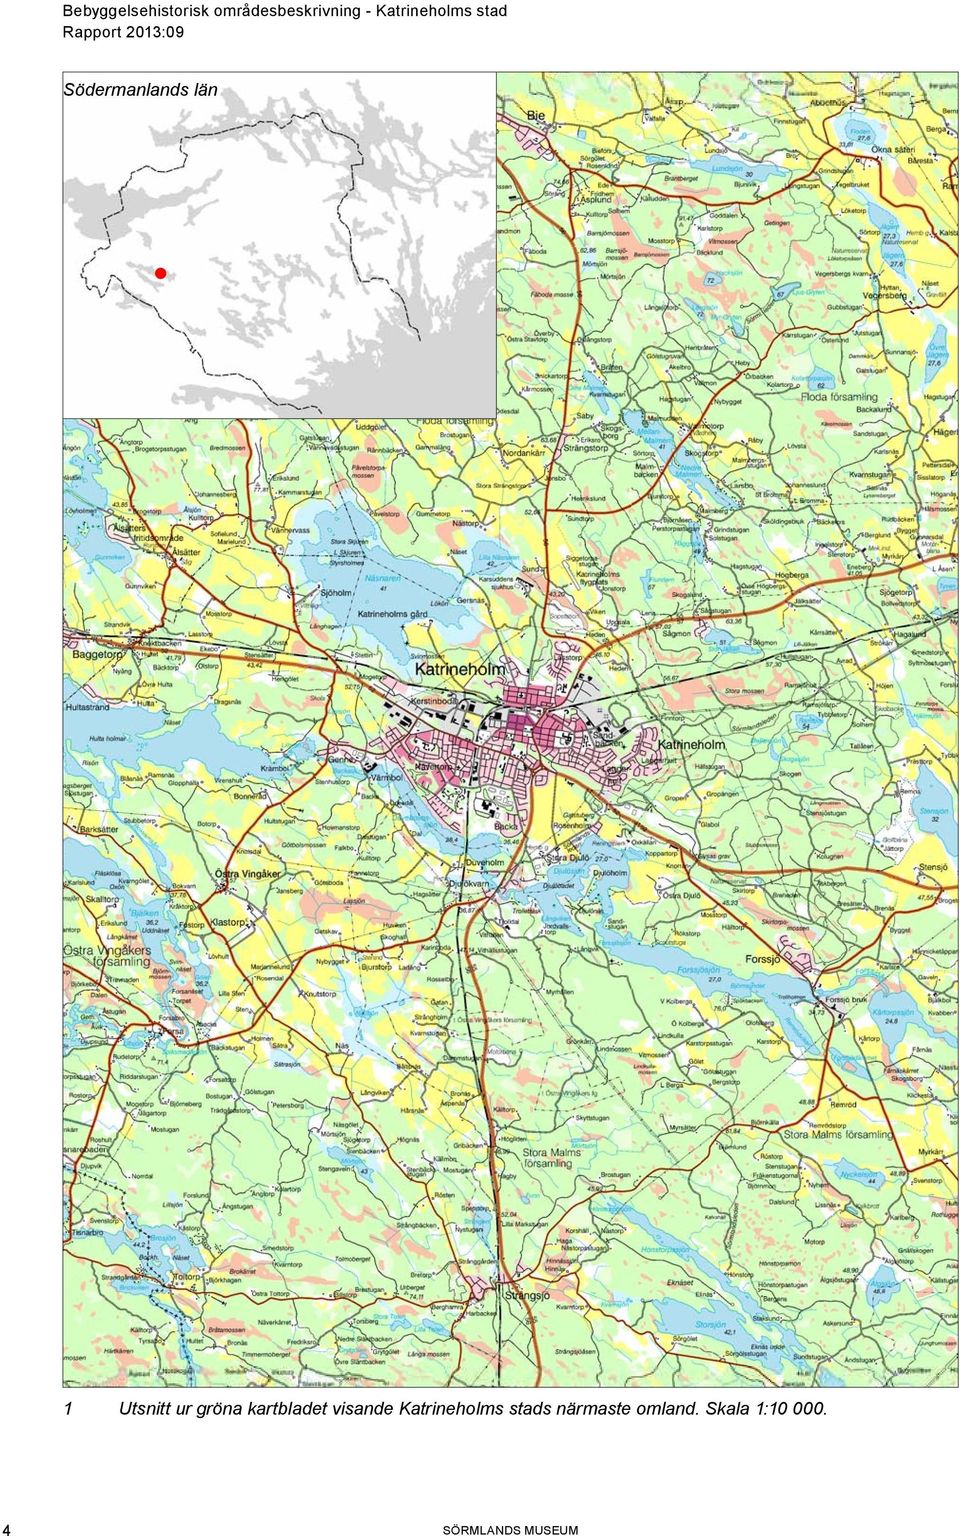 kartbladet visande Katrineholms stads närmaste omland.